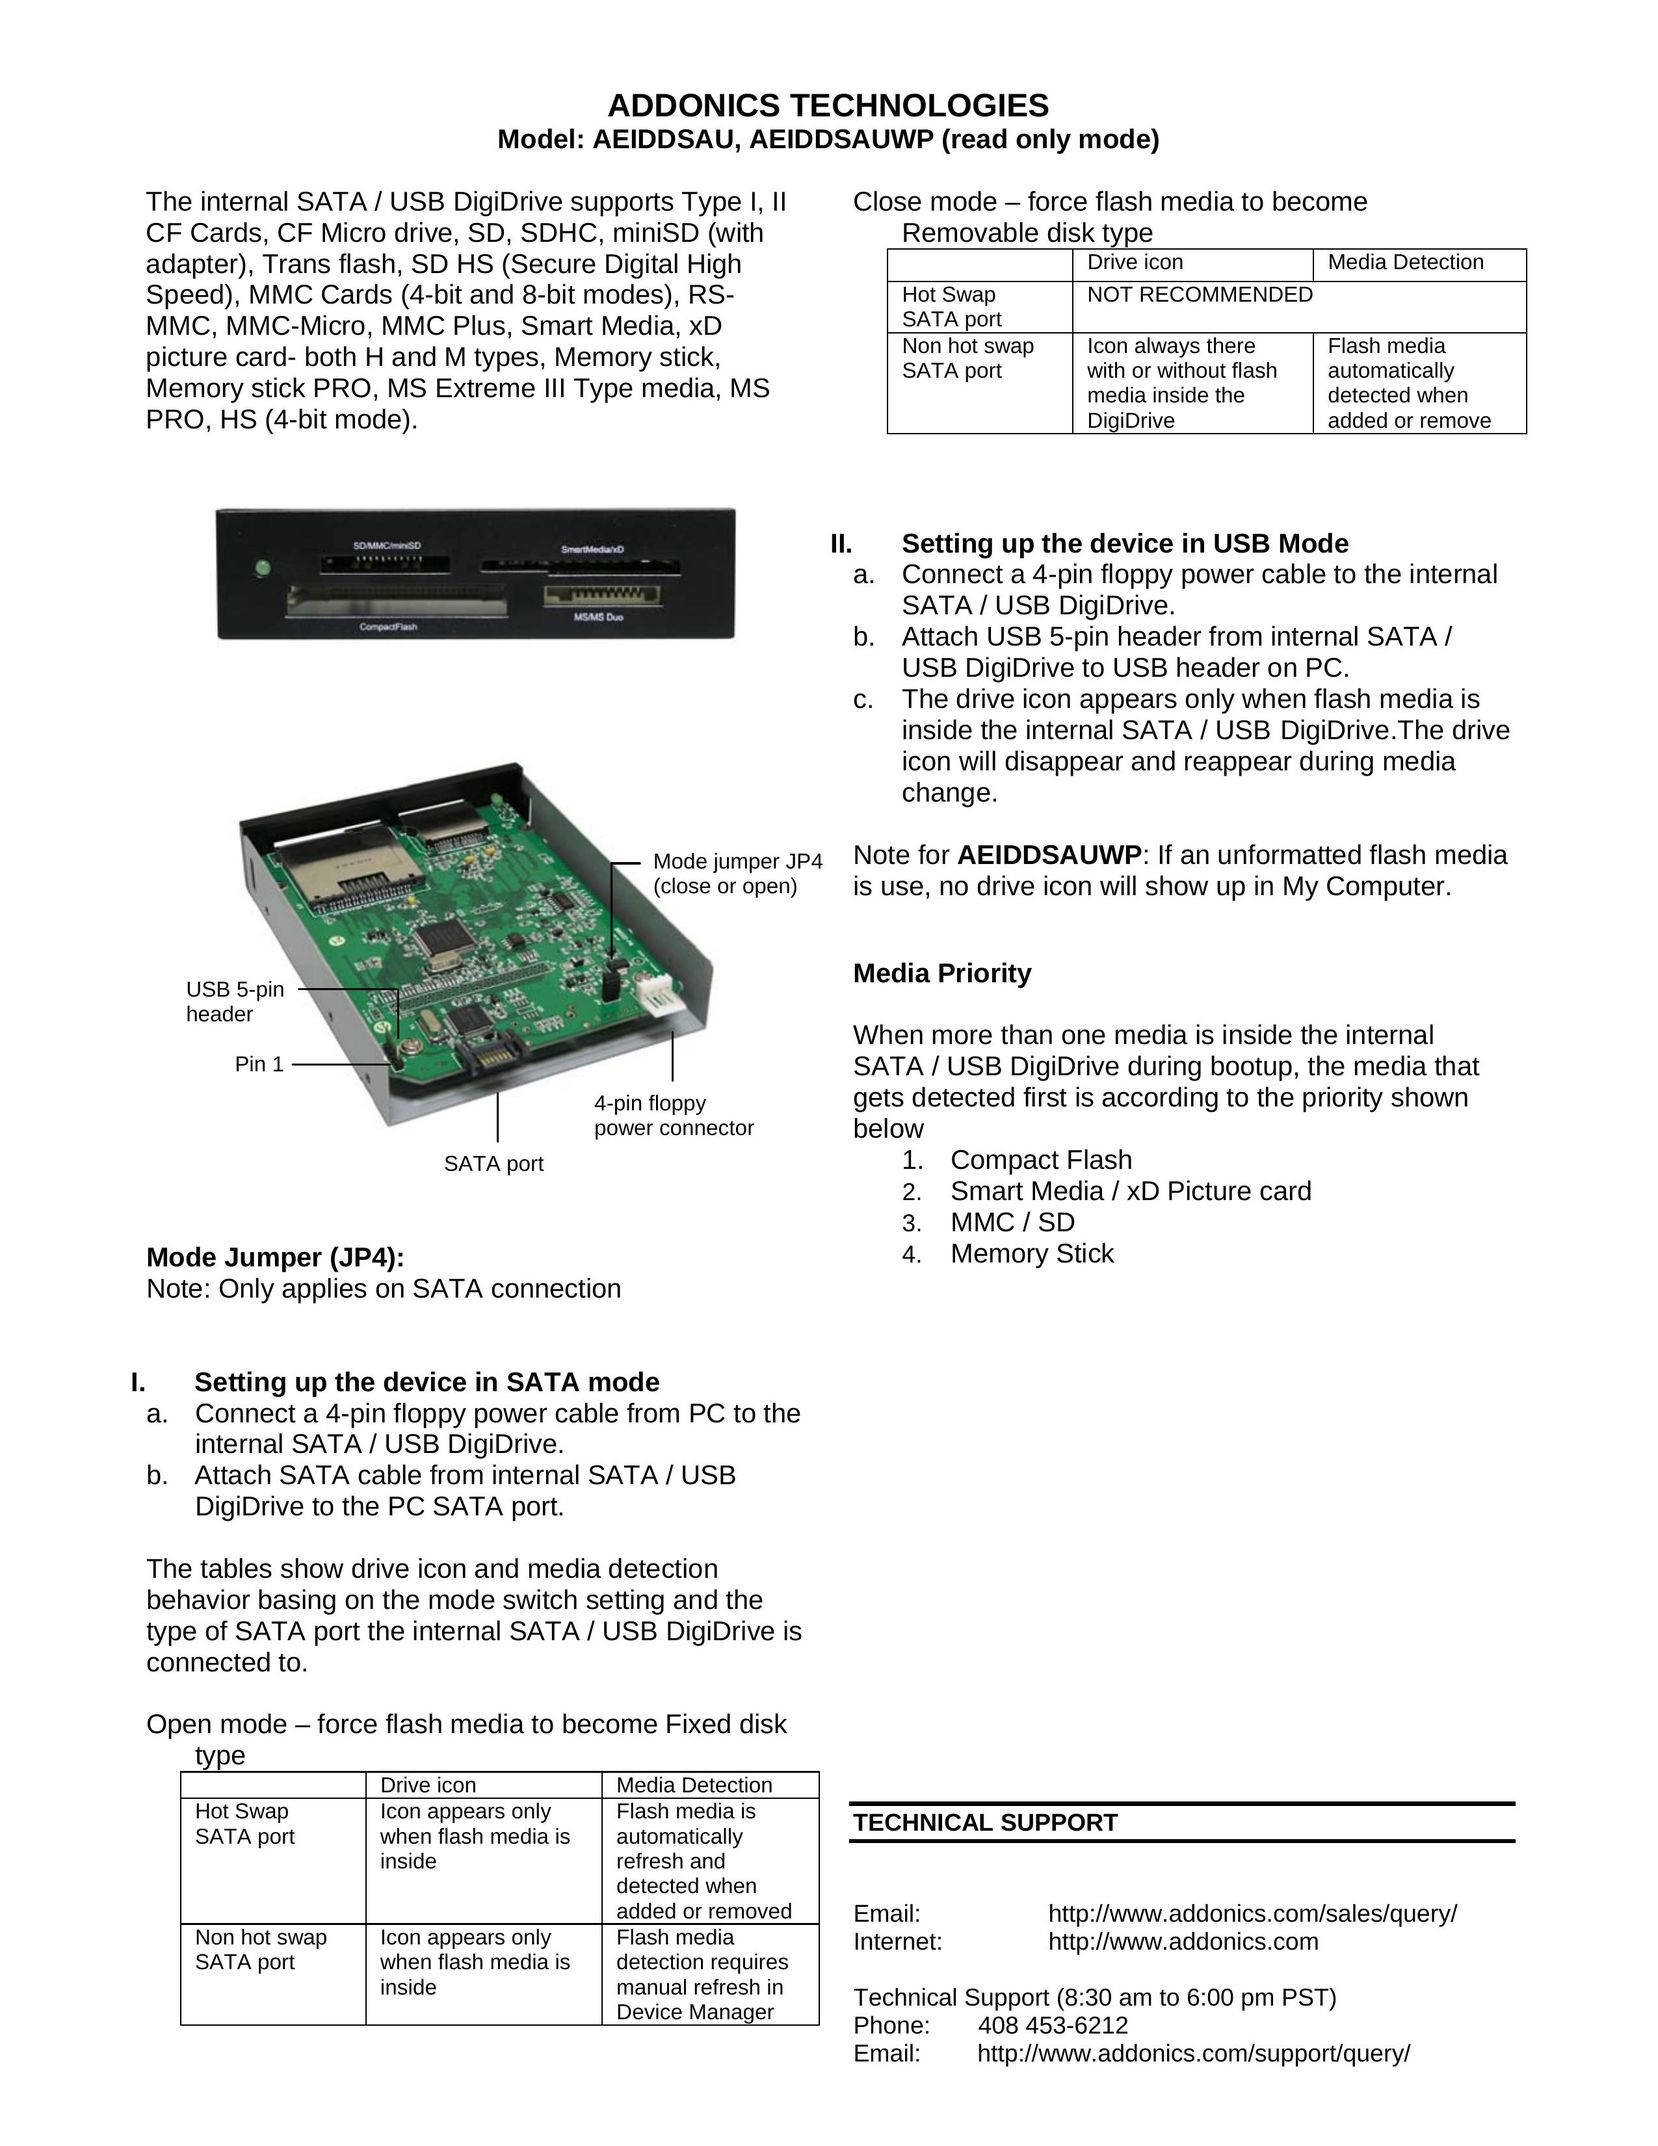 Addonics Technologies AEIDDSAU Computer Drive User Manual